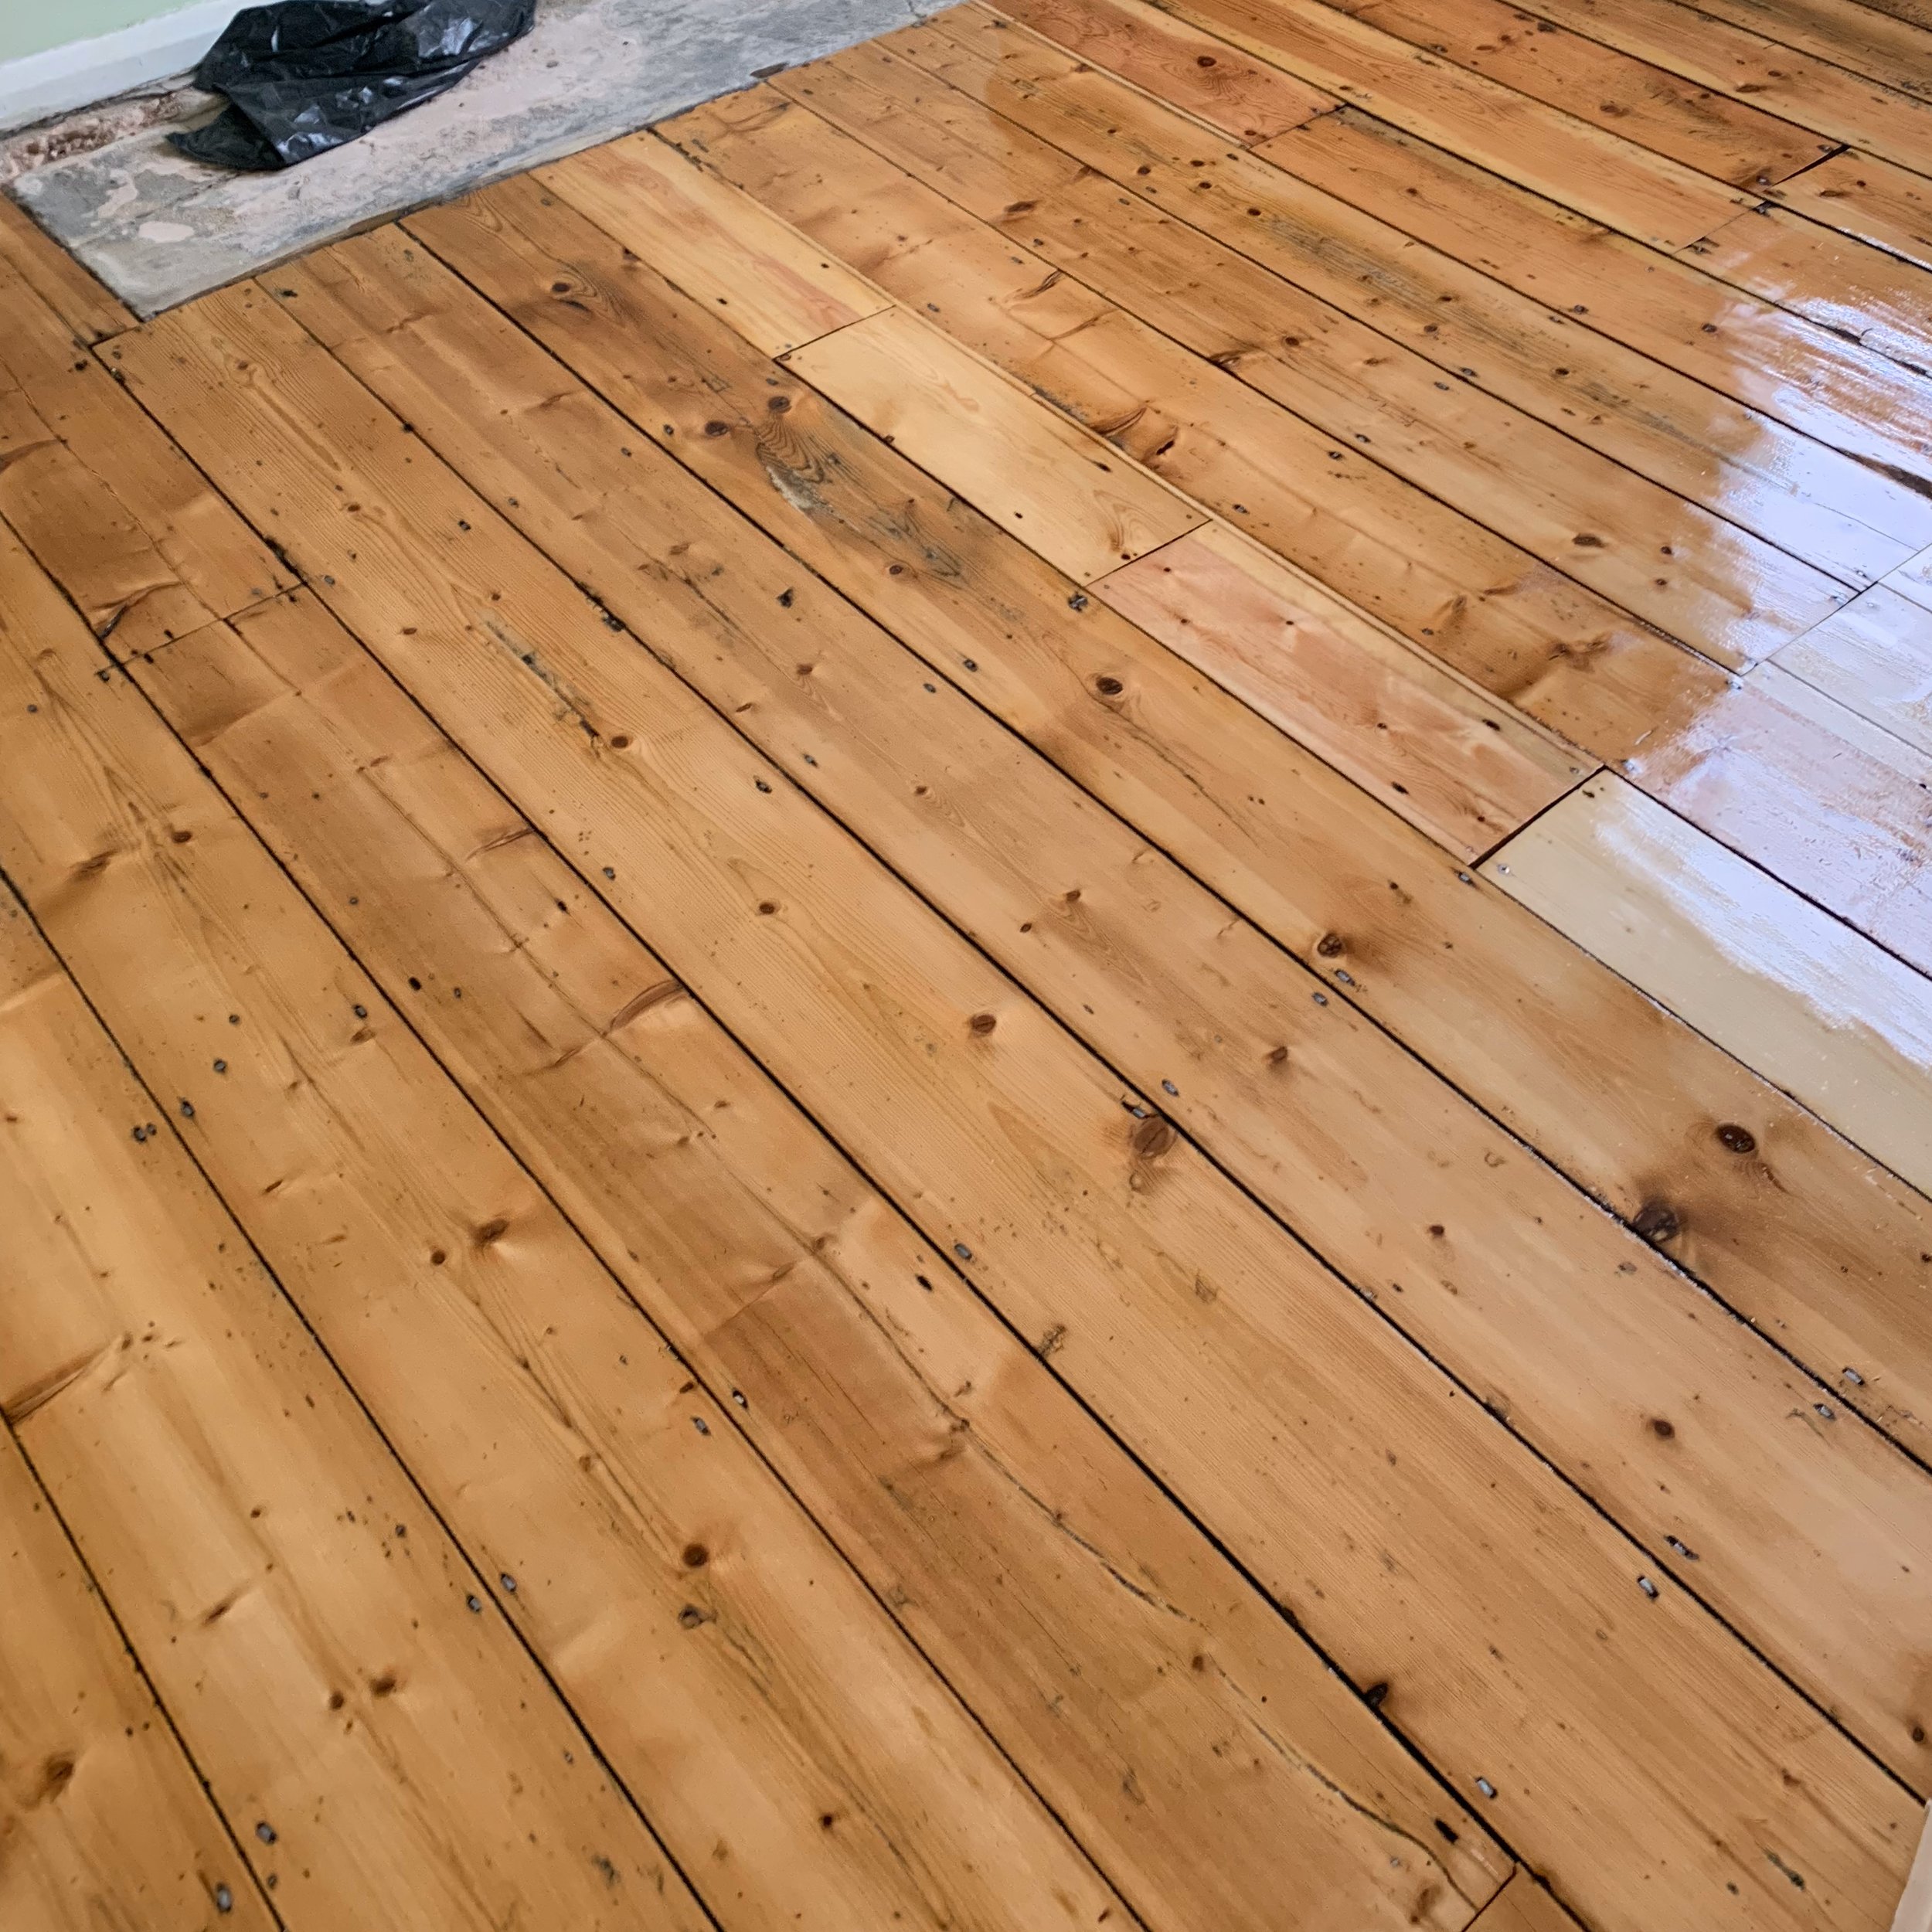 pine floor restored.jpg